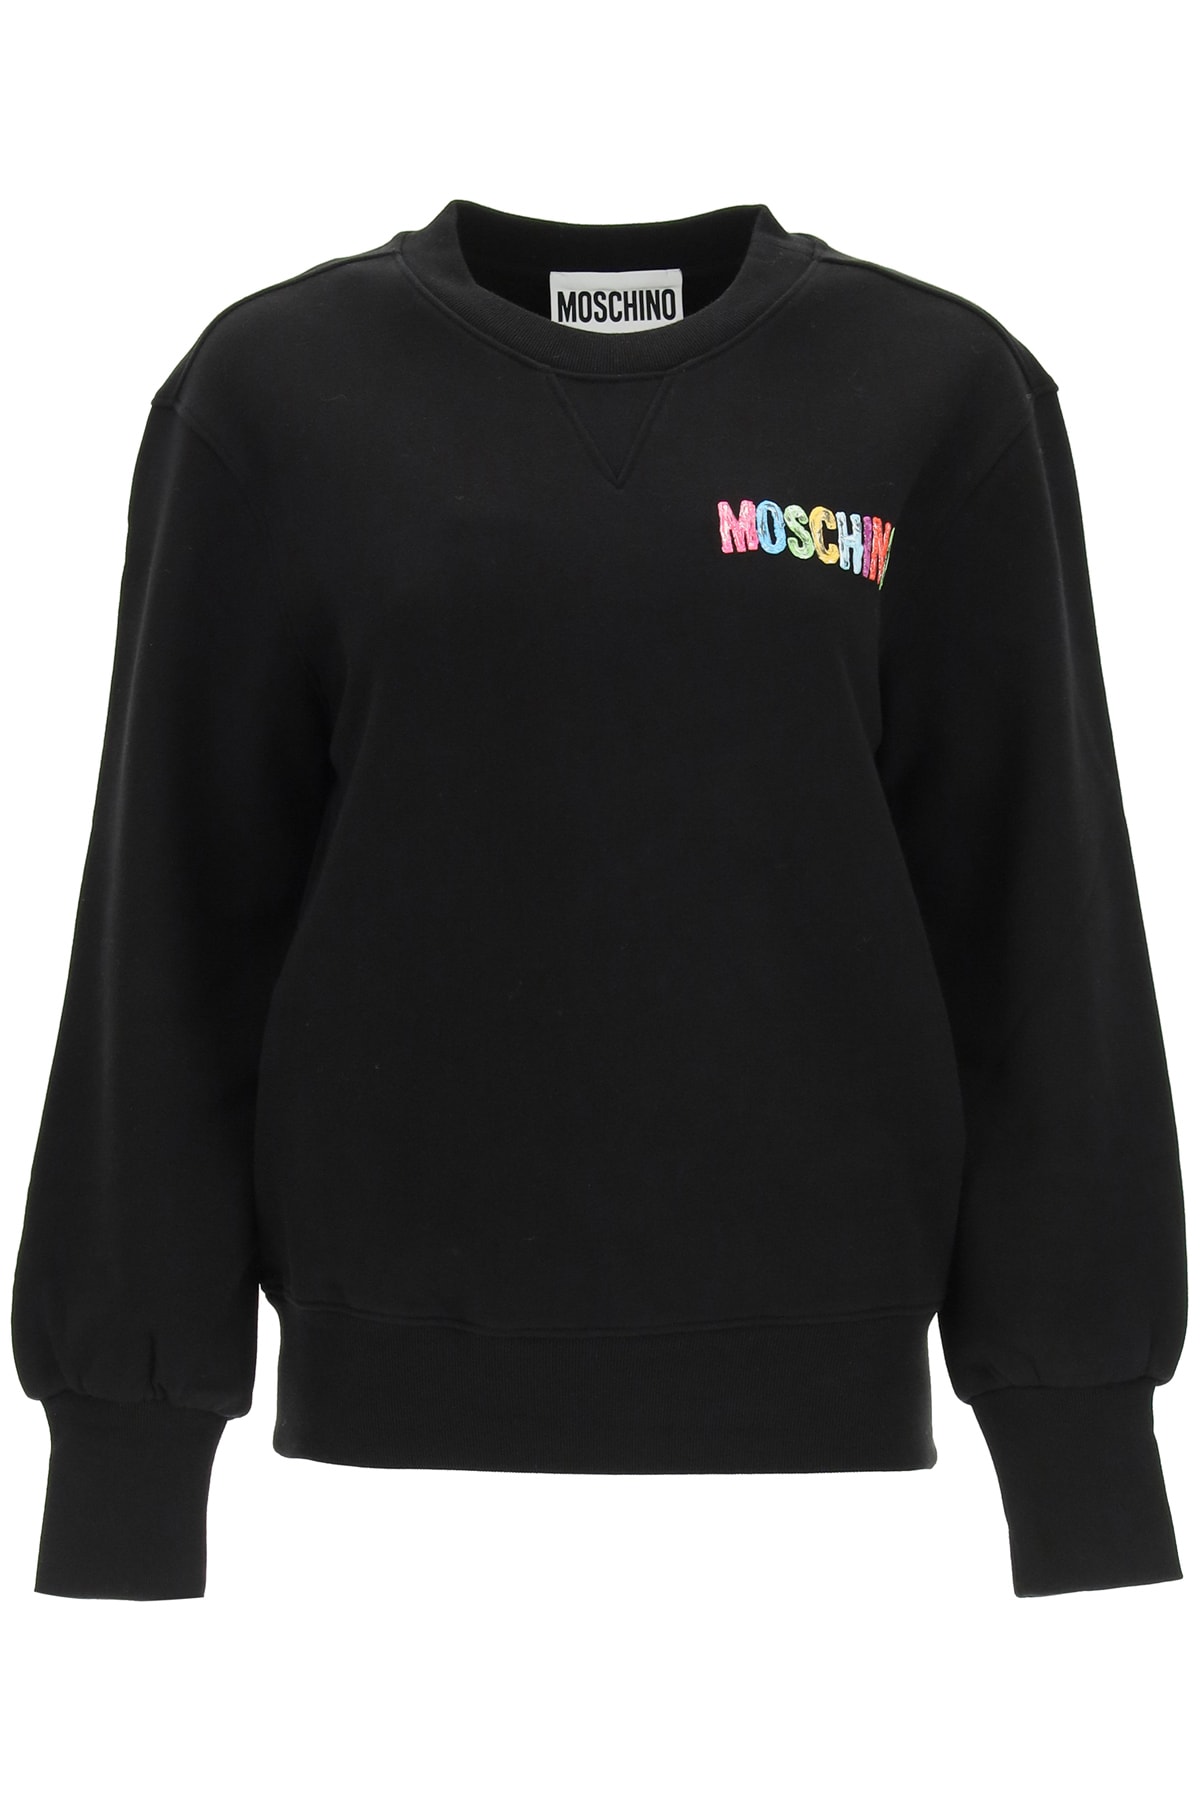 Moschino Sweatshirt With Multicolor Moschino Print